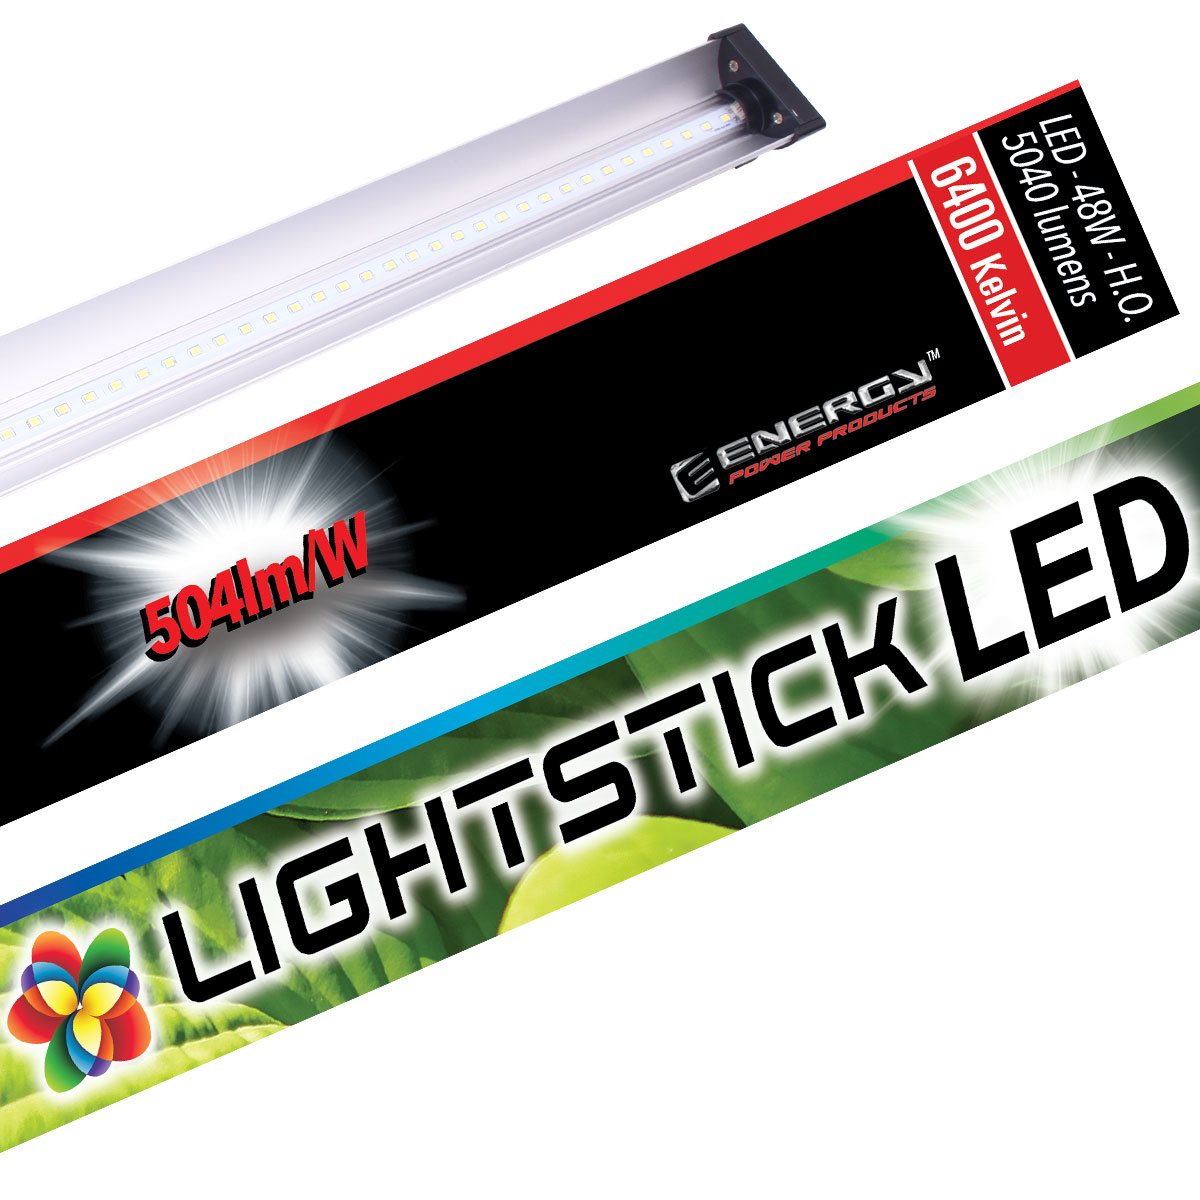 Lightstick